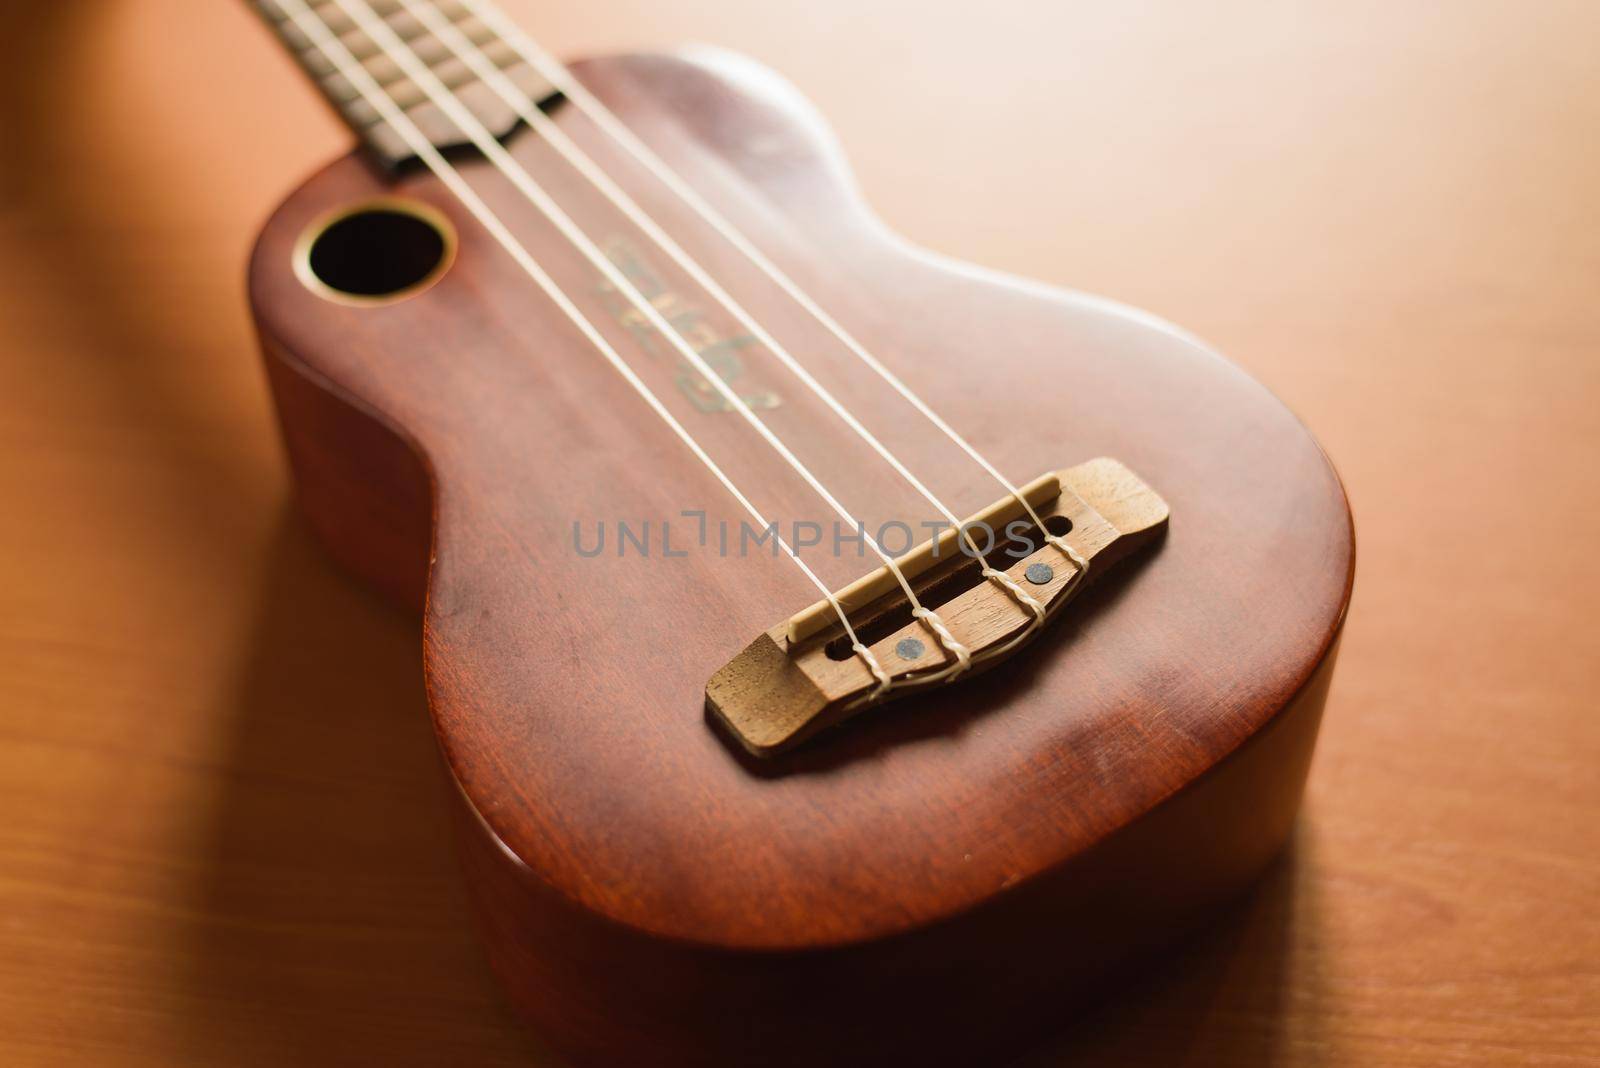 Vintage ukulele on wooden table by Wmpix